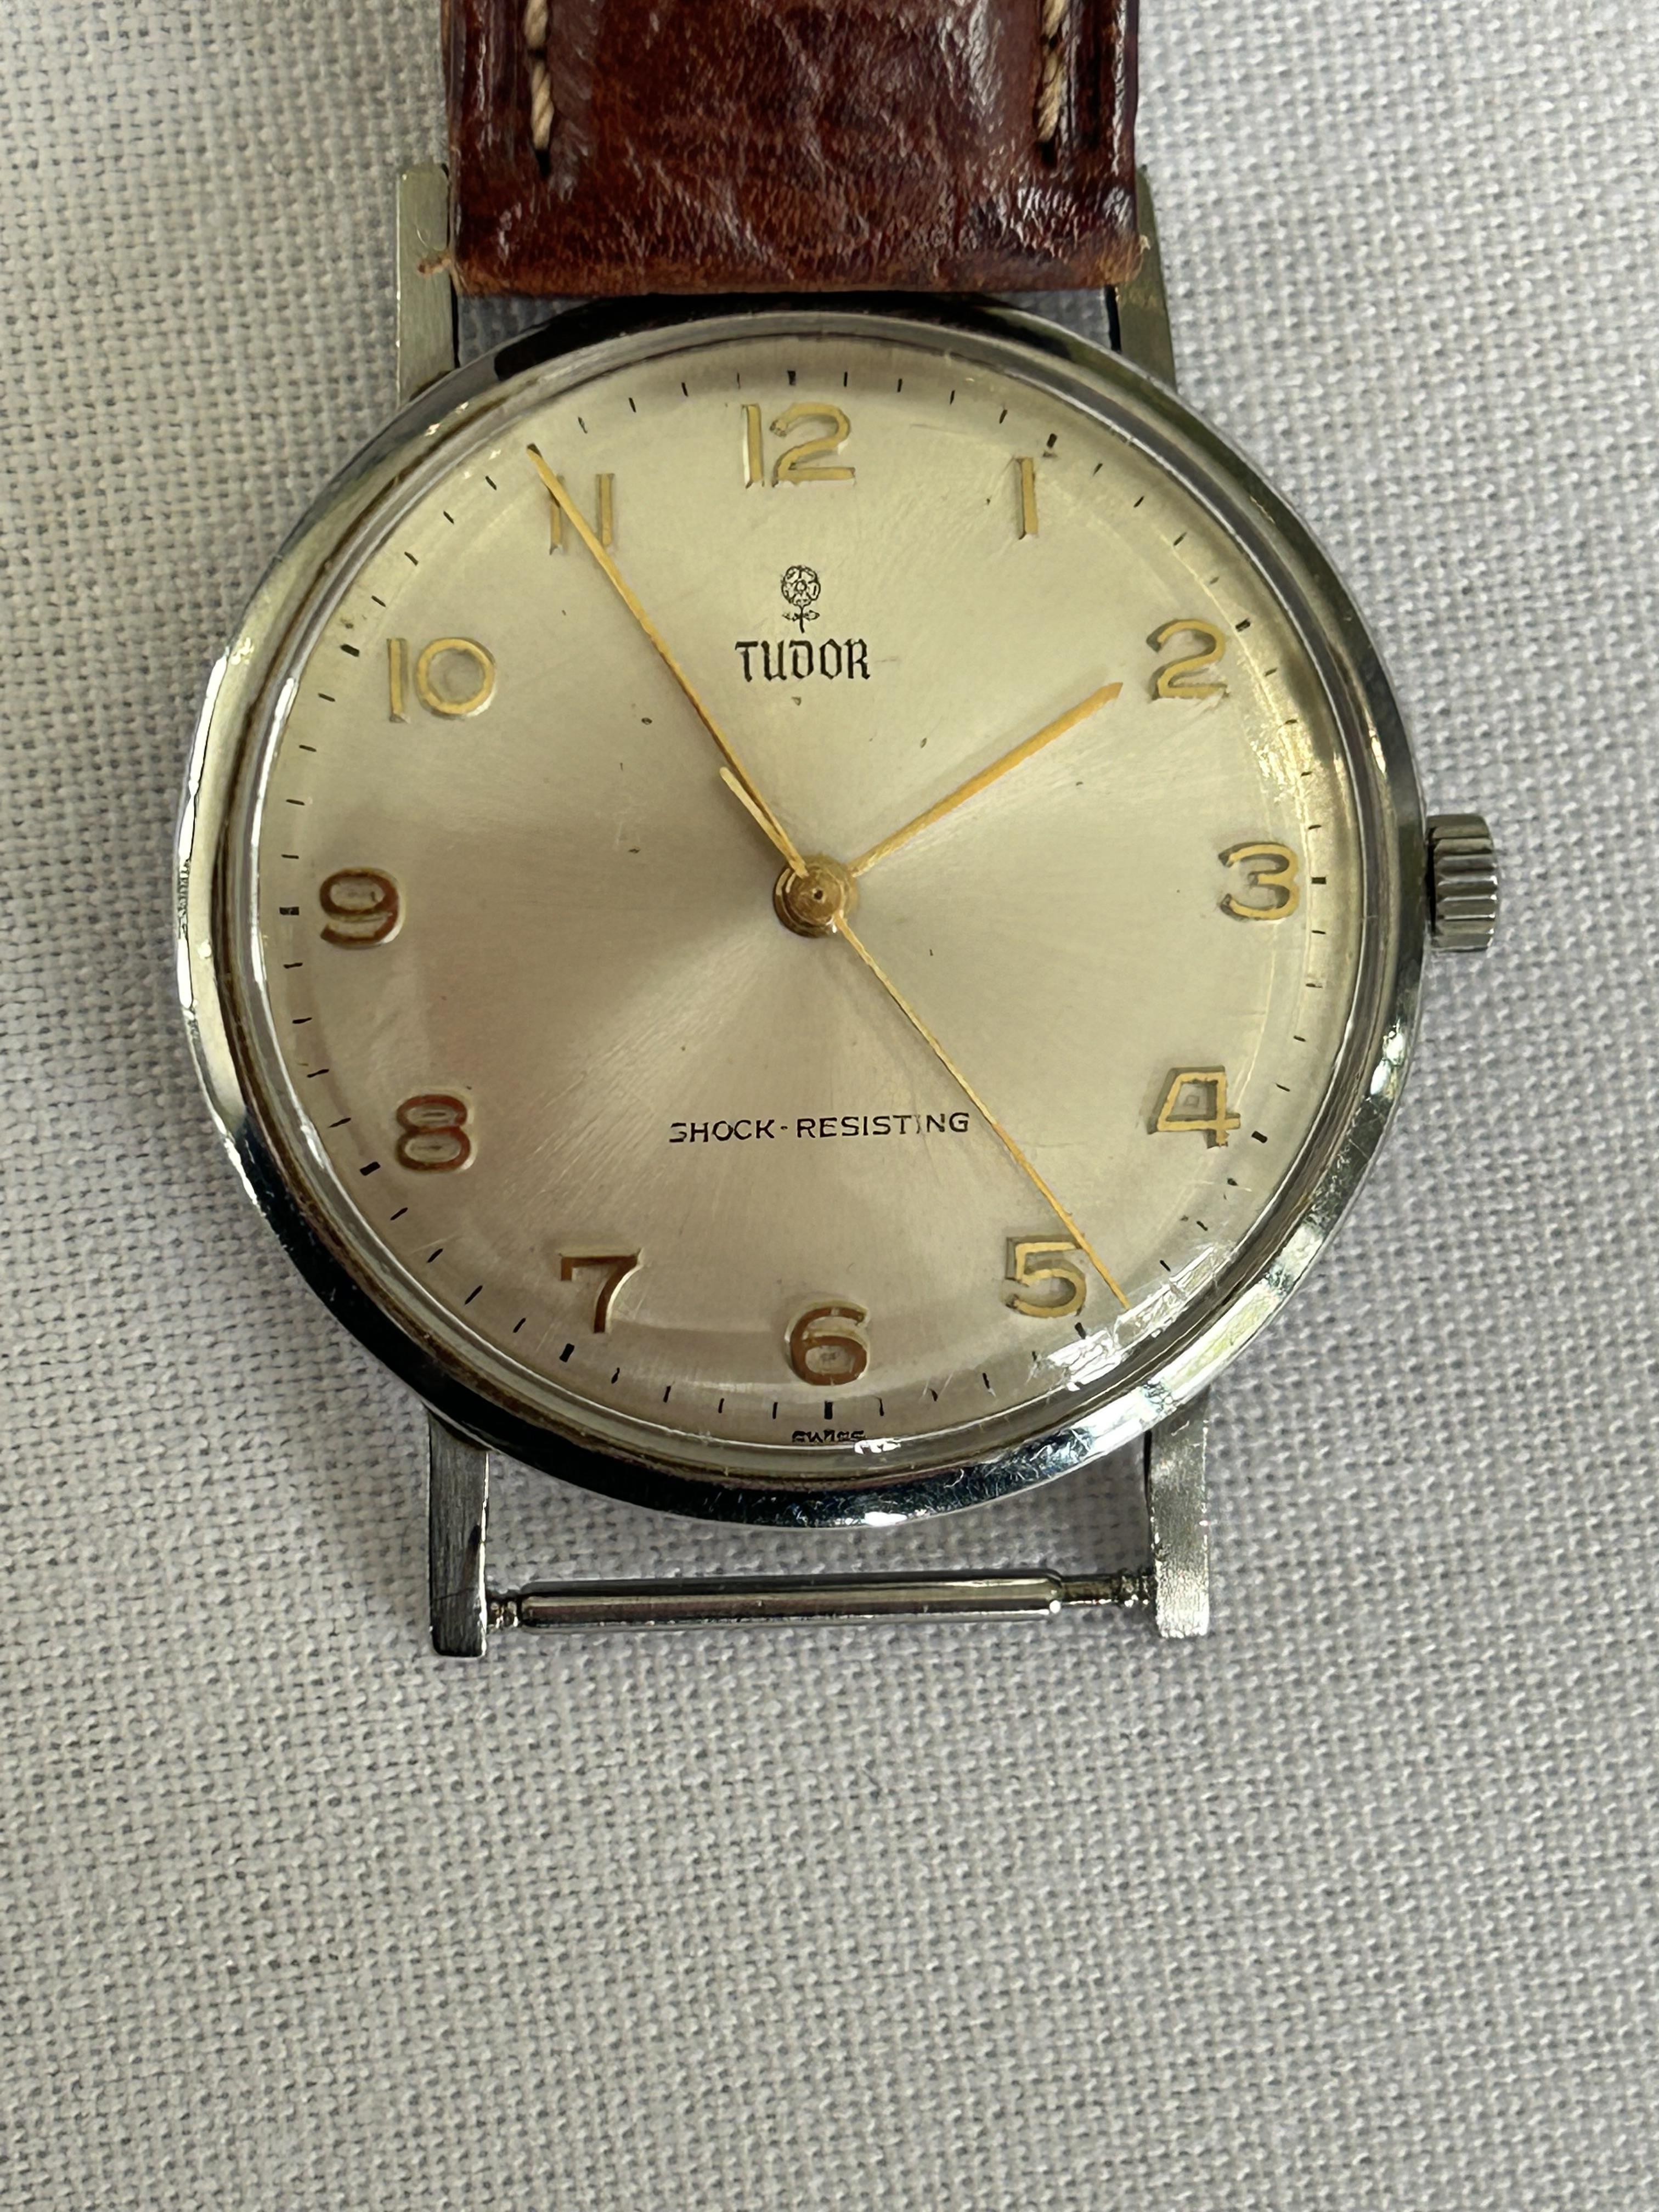 A Tudor stainless steel gentleman's watch - Image 2 of 4